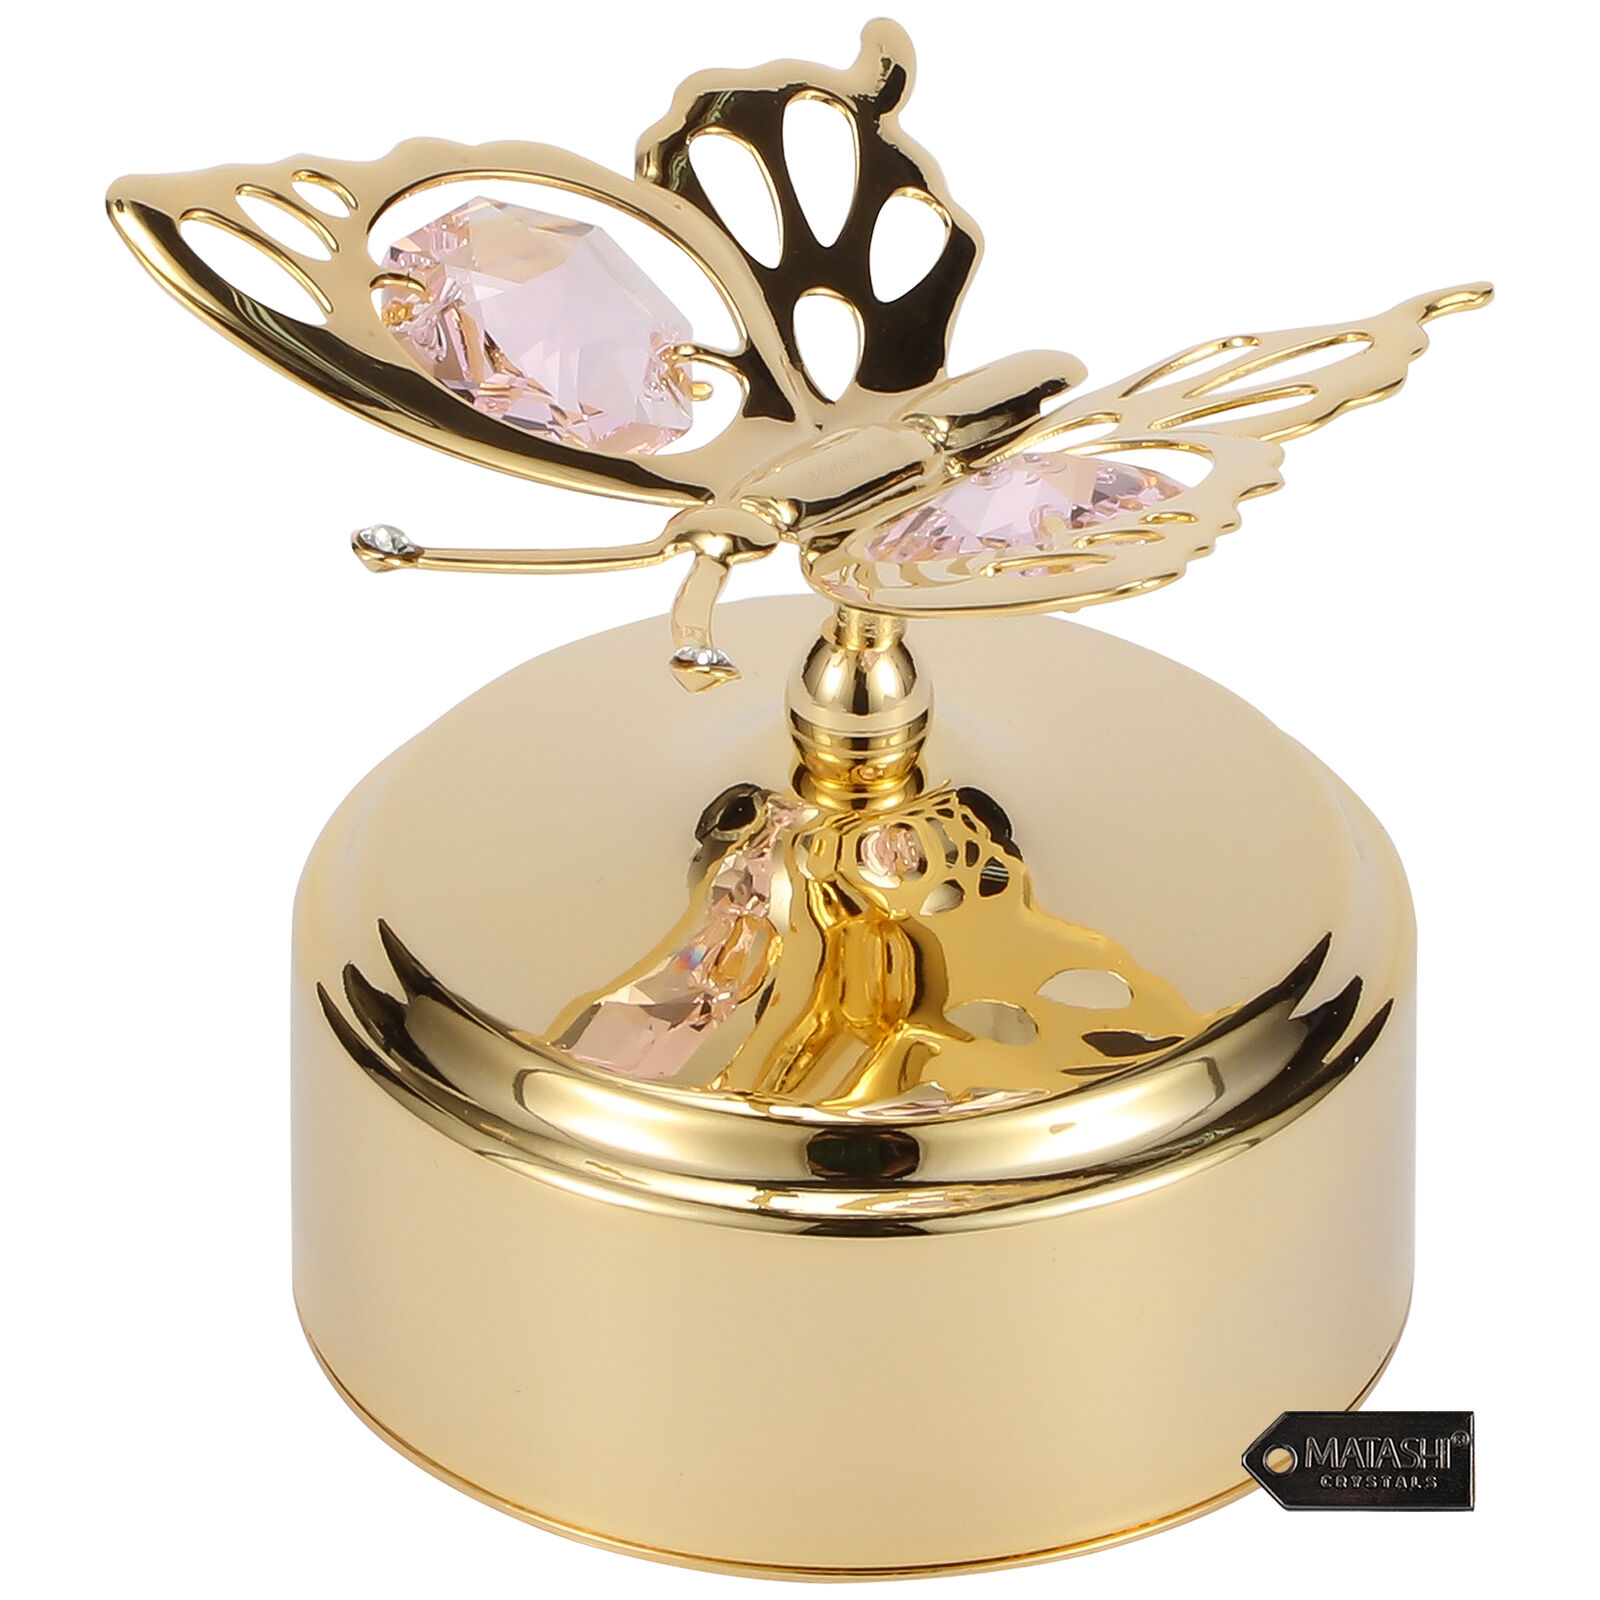 Matashi 24K Gold Plated Music Box Plays Memory  W/  Studded Butterfly Figurine